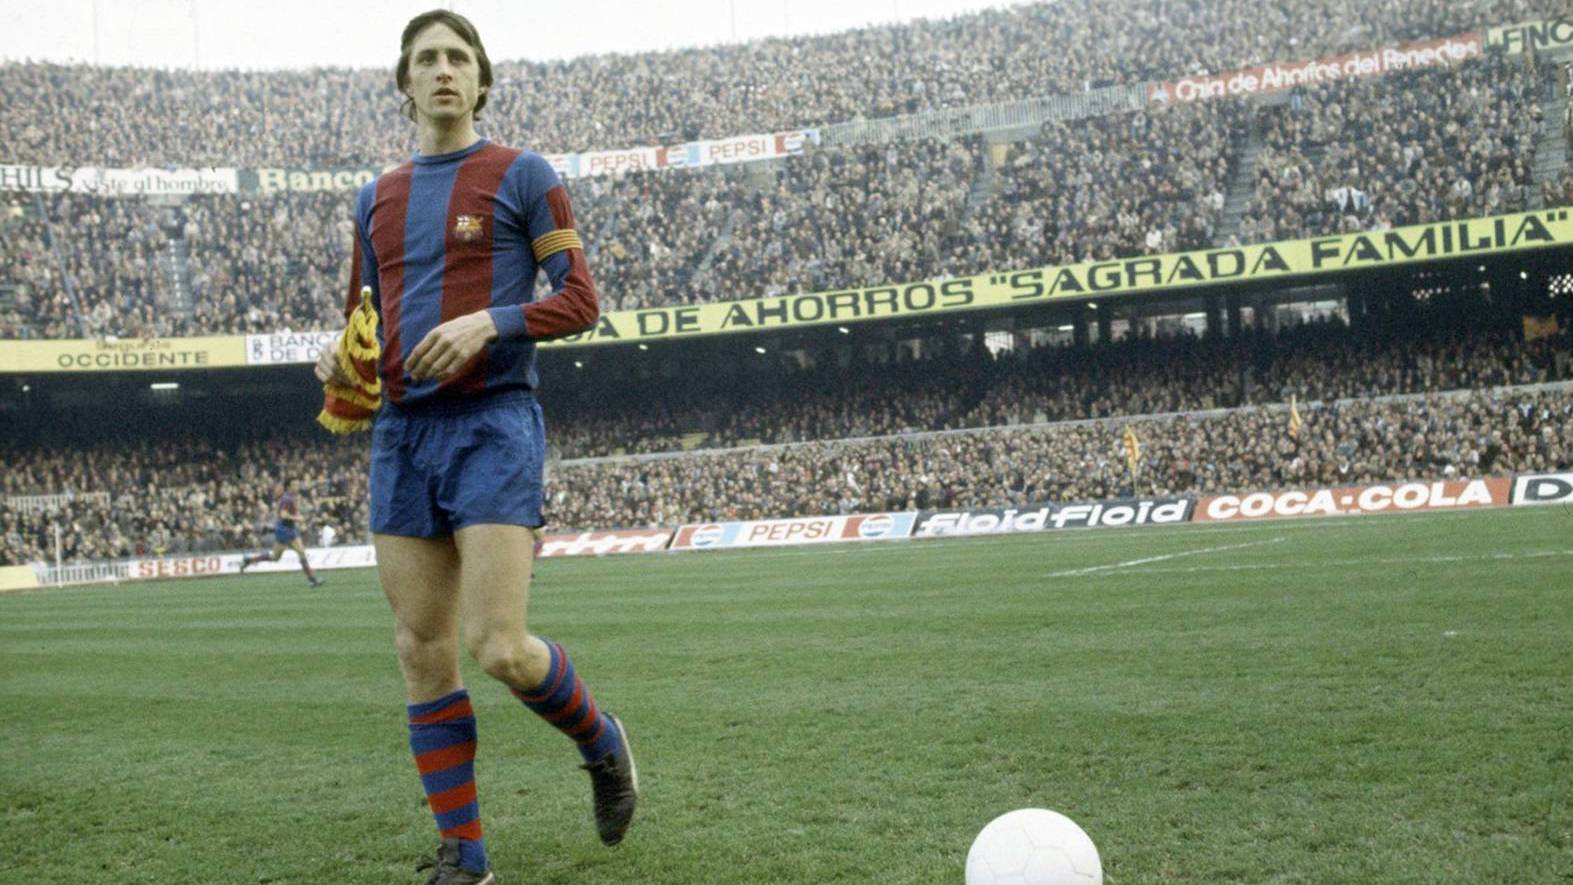 Johan Cruyff, touching a balloon with the T-shirt of the Barça